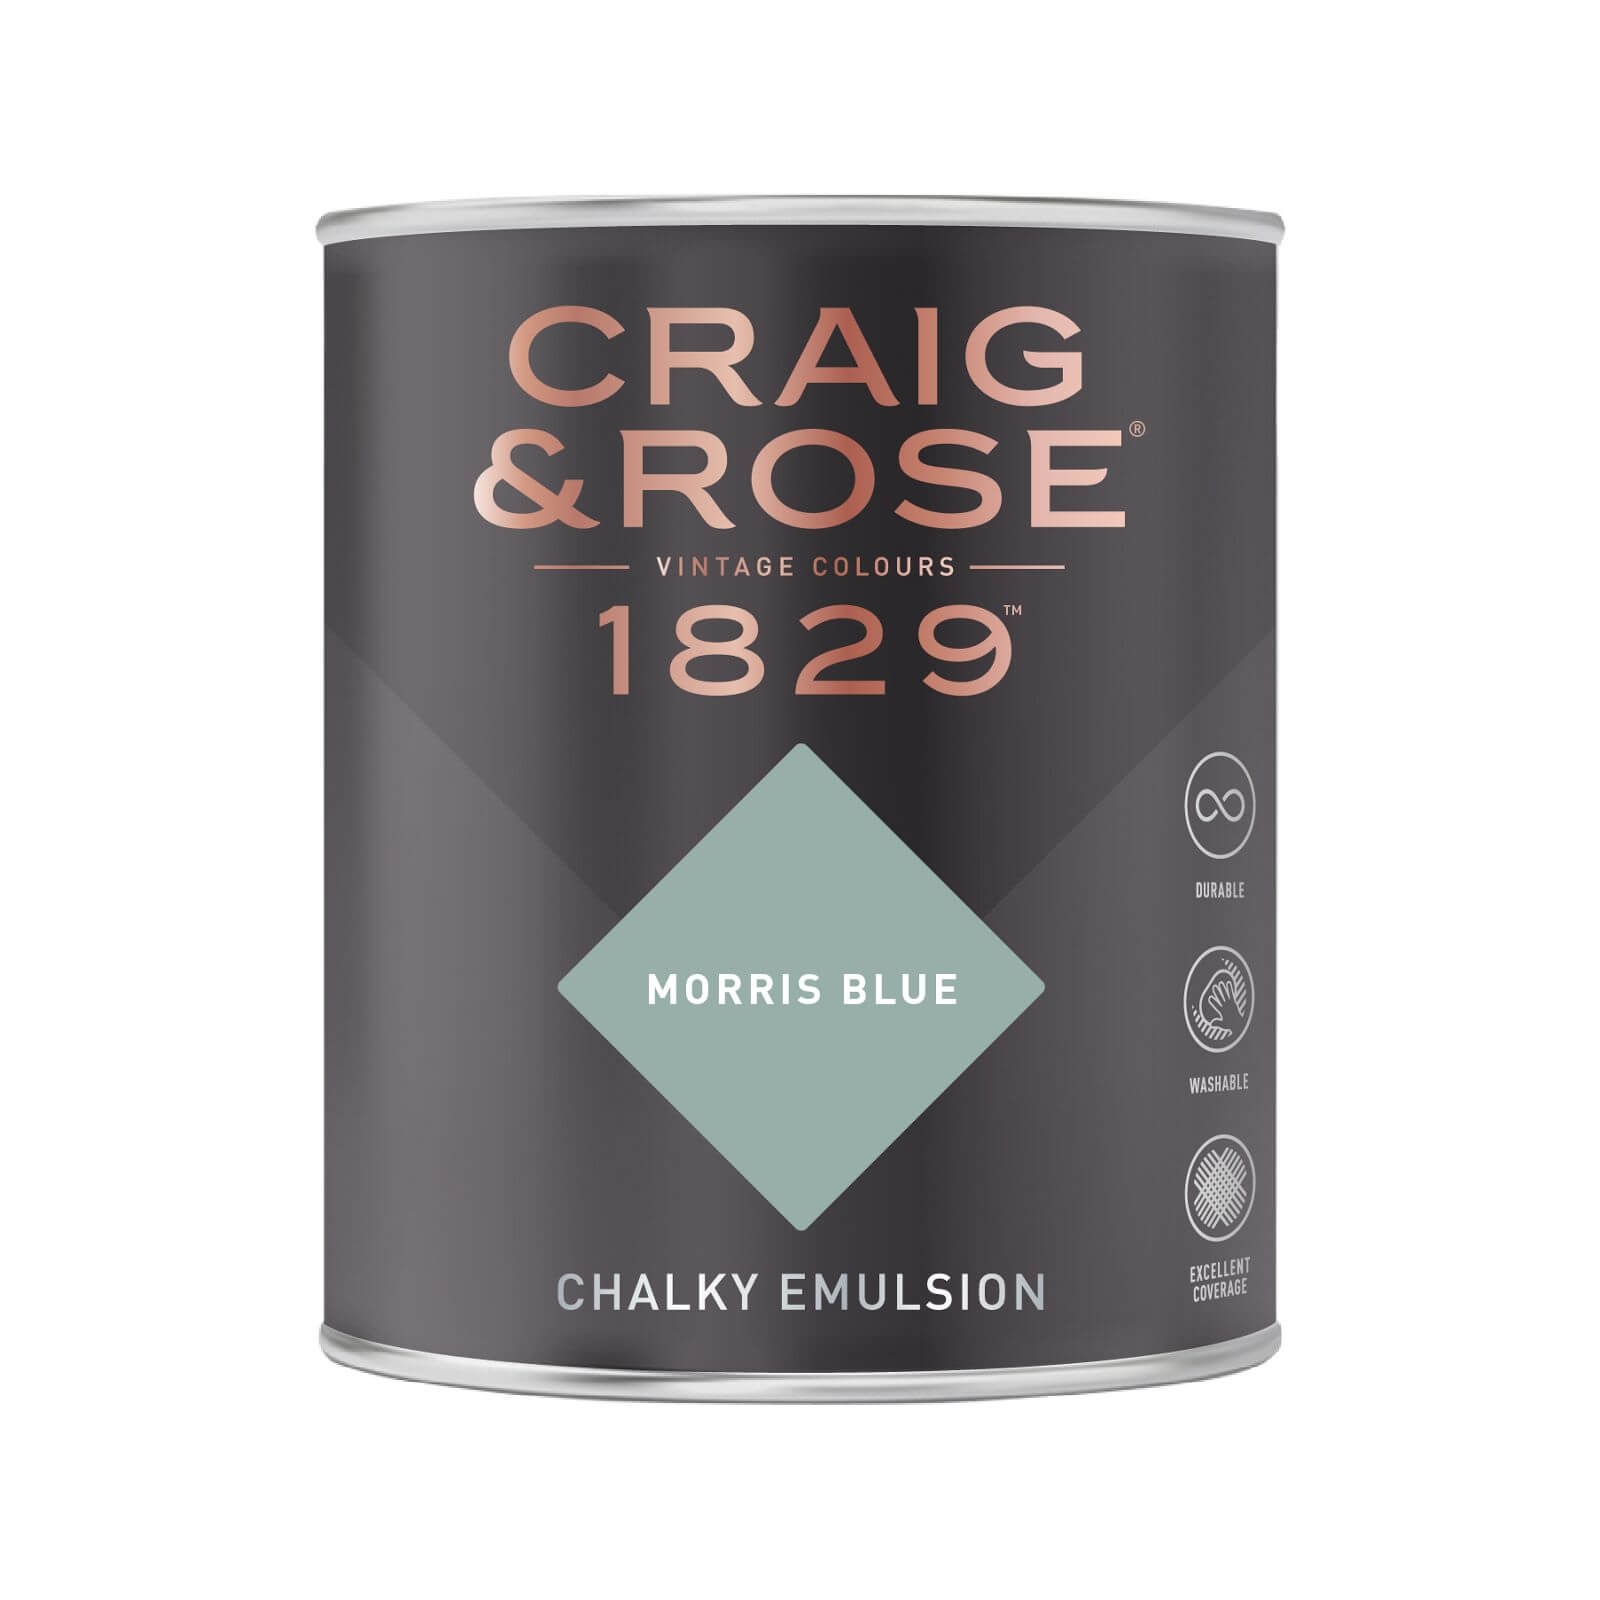 Craig & Rose 1829 Chalky Emulsion Paint Morris Blue - 750ml